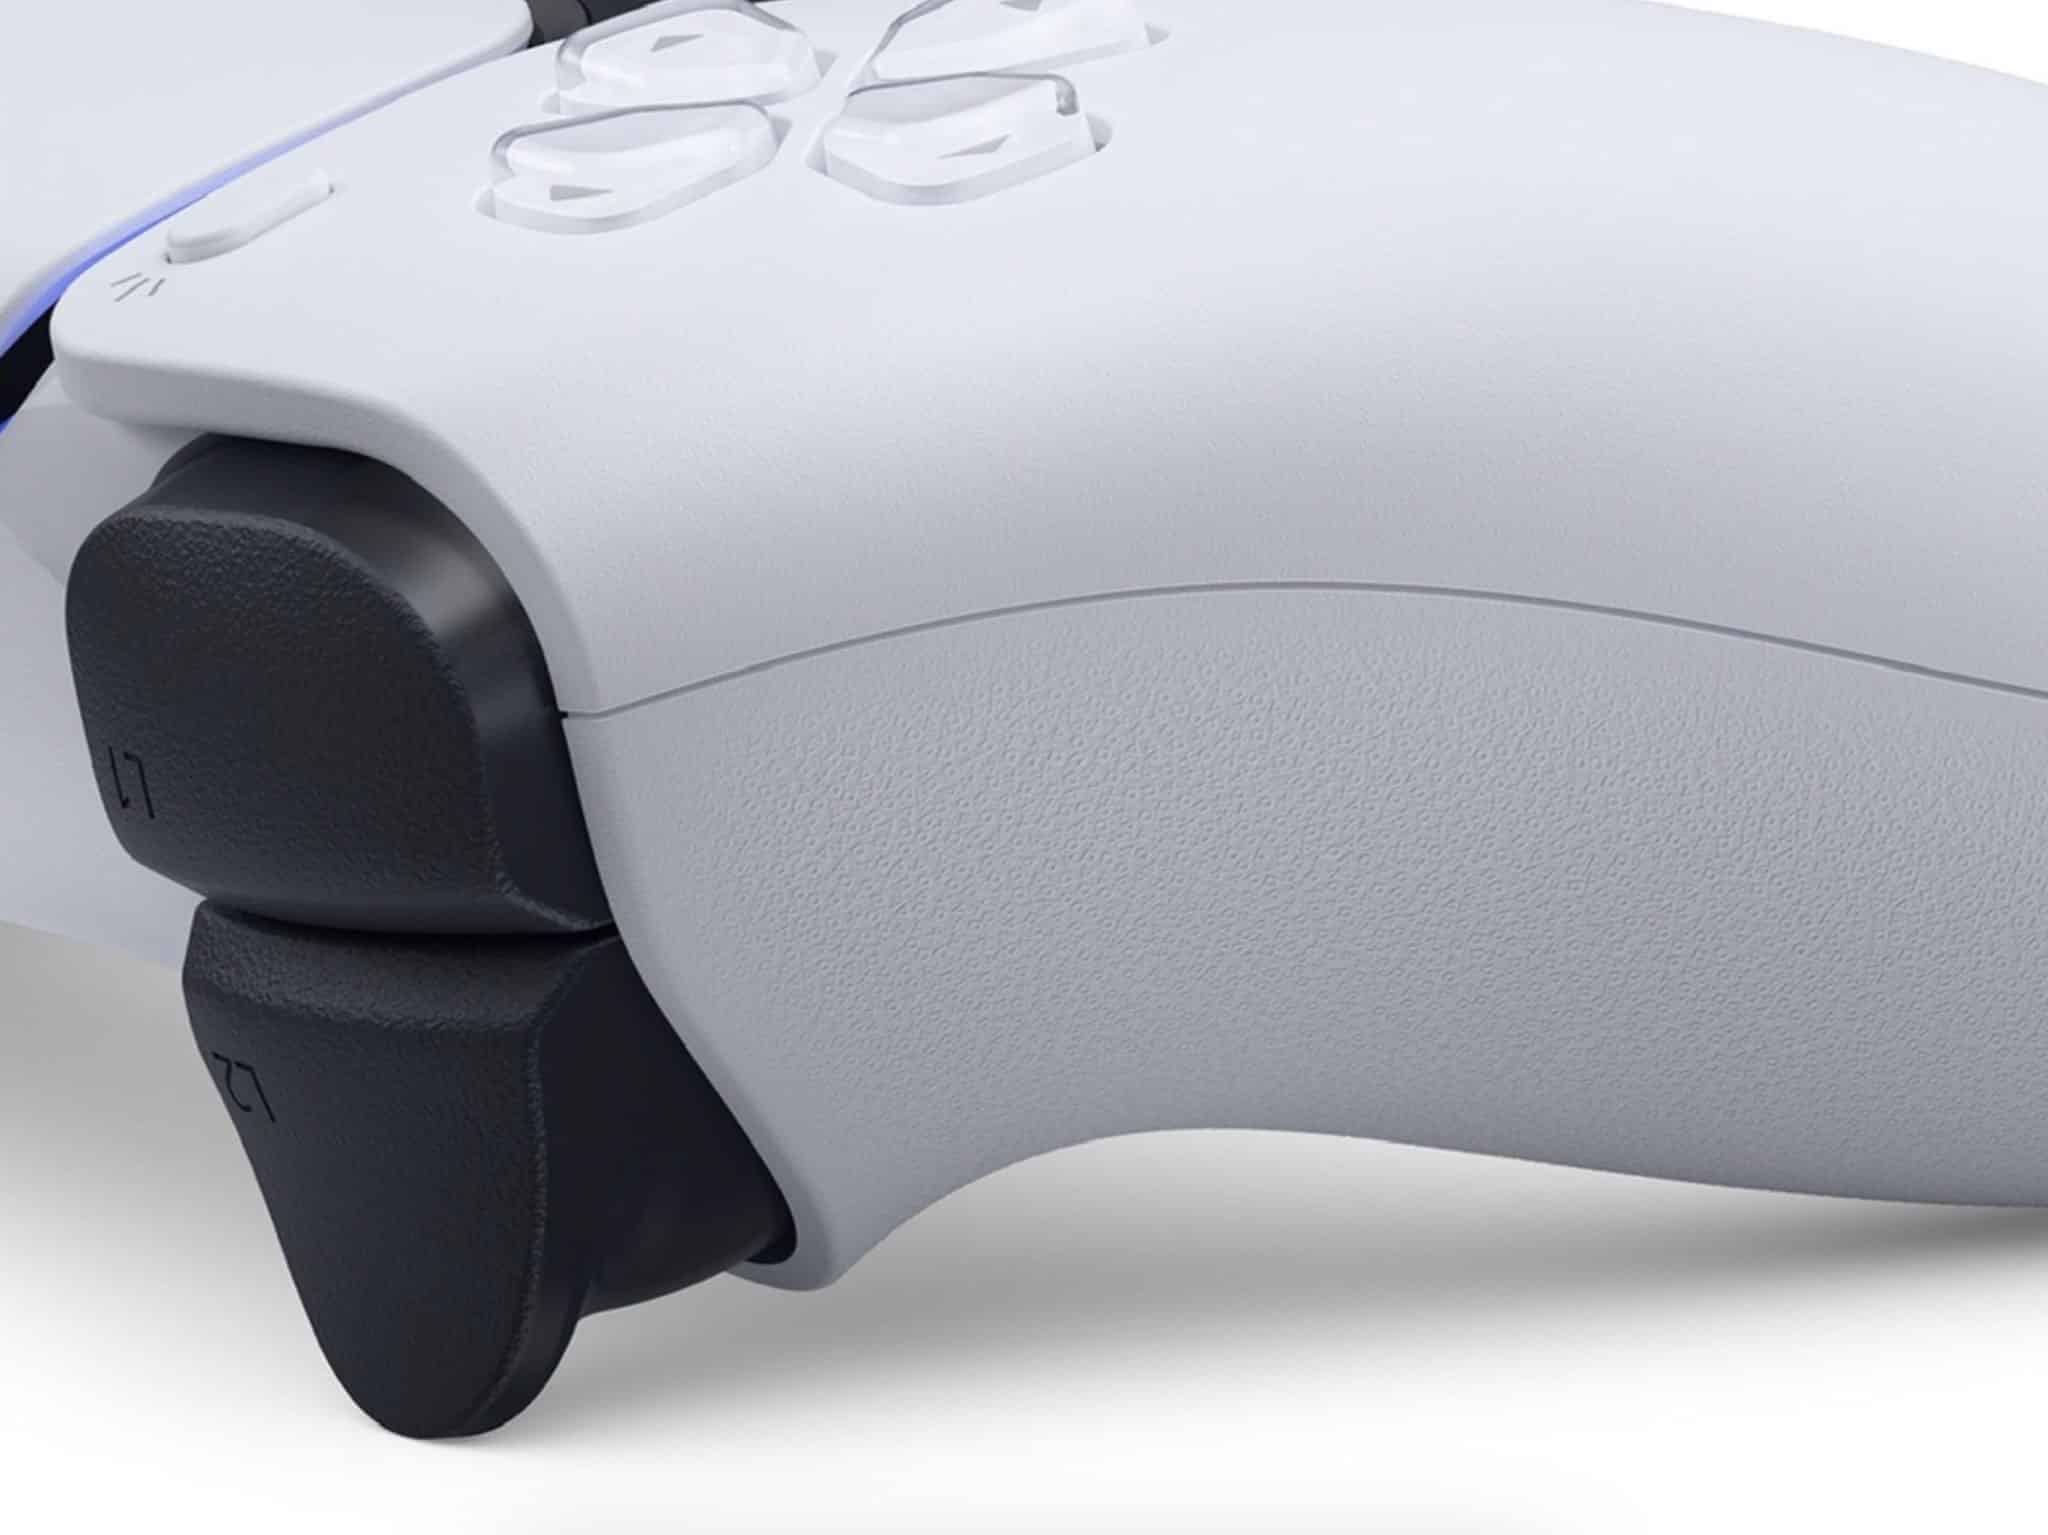 PS5 DualSense Up-Close Photos Show Off Hidden PlayStation Symbols